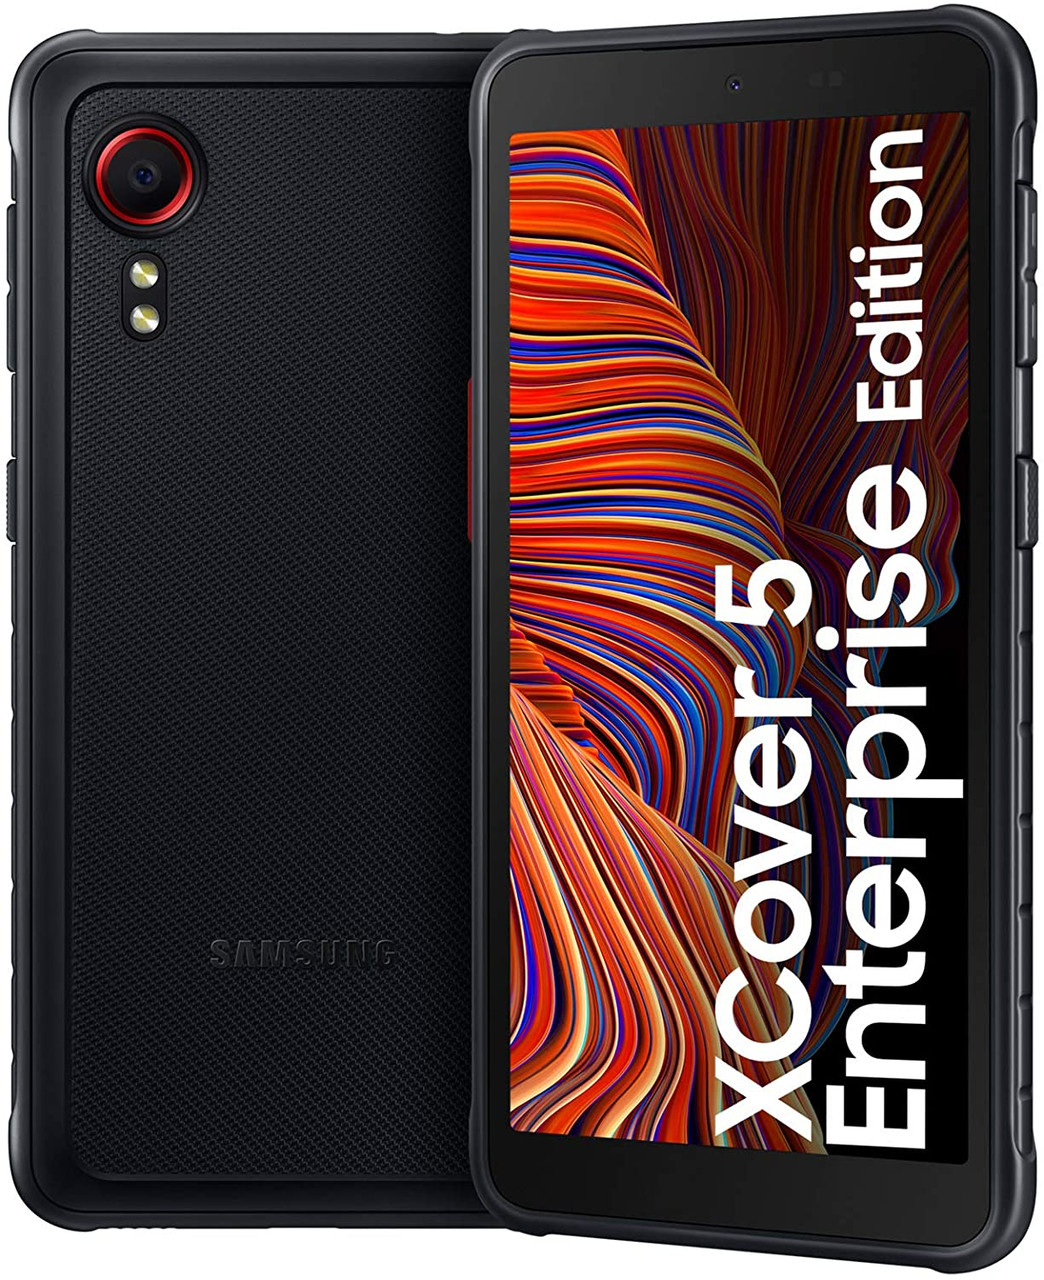 Vete veld schuur Samsung Galaxy XCover 5 Android Waterproof Rugged Smartphone Unlocked Dual  Sim 64GB Black